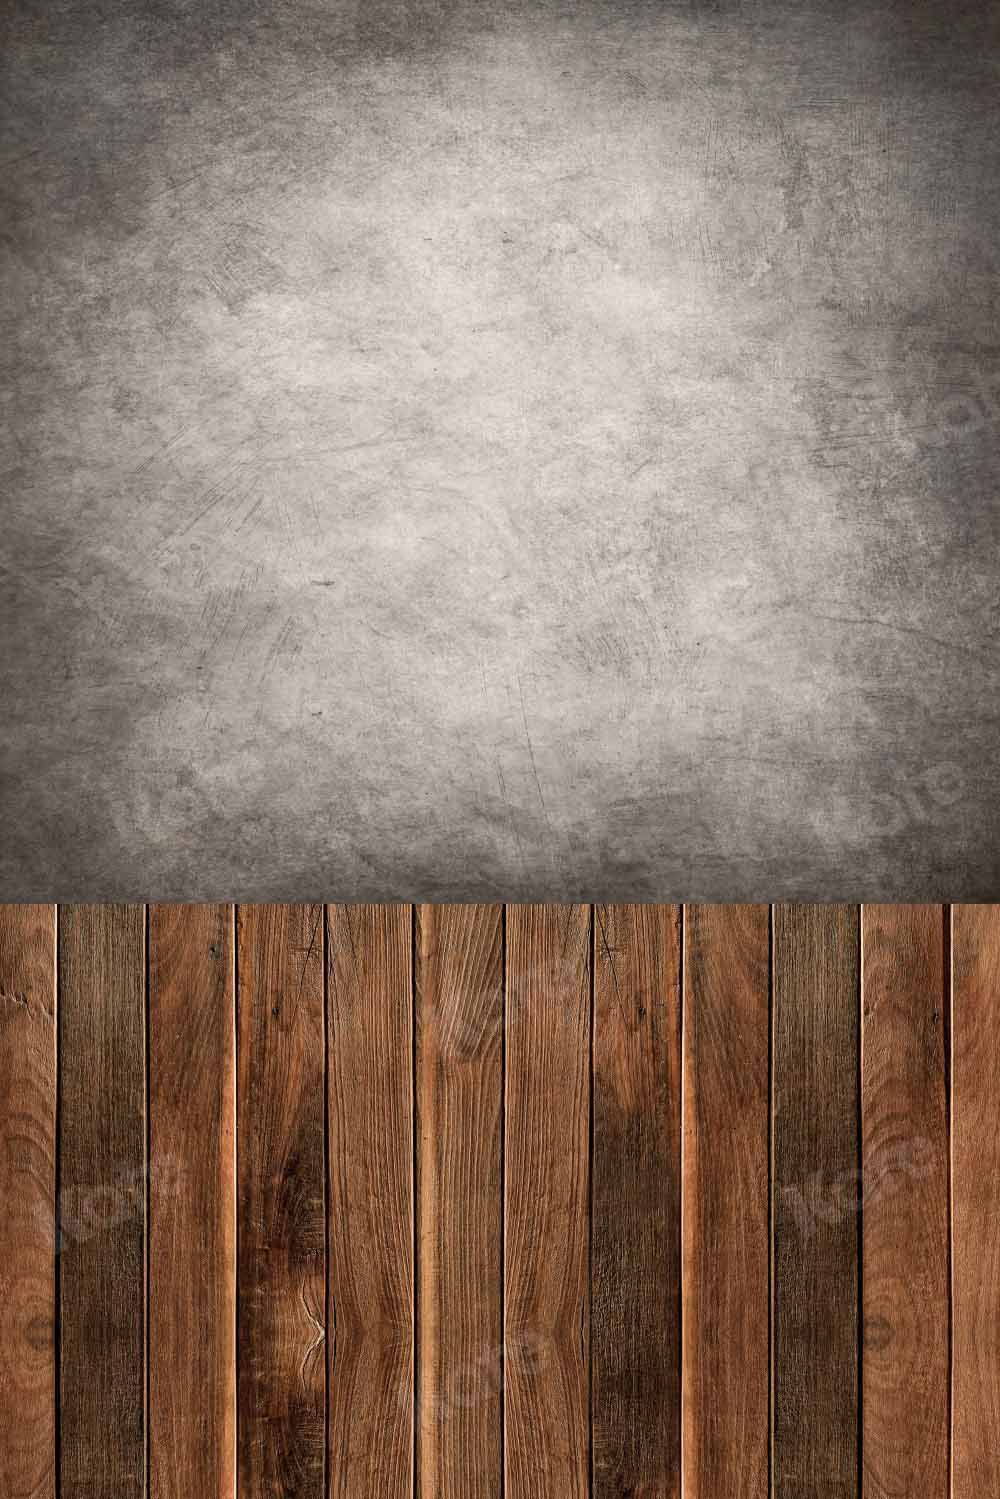 Kate Kombibackdrop grau abstrakt Braun Holz Hintergrund